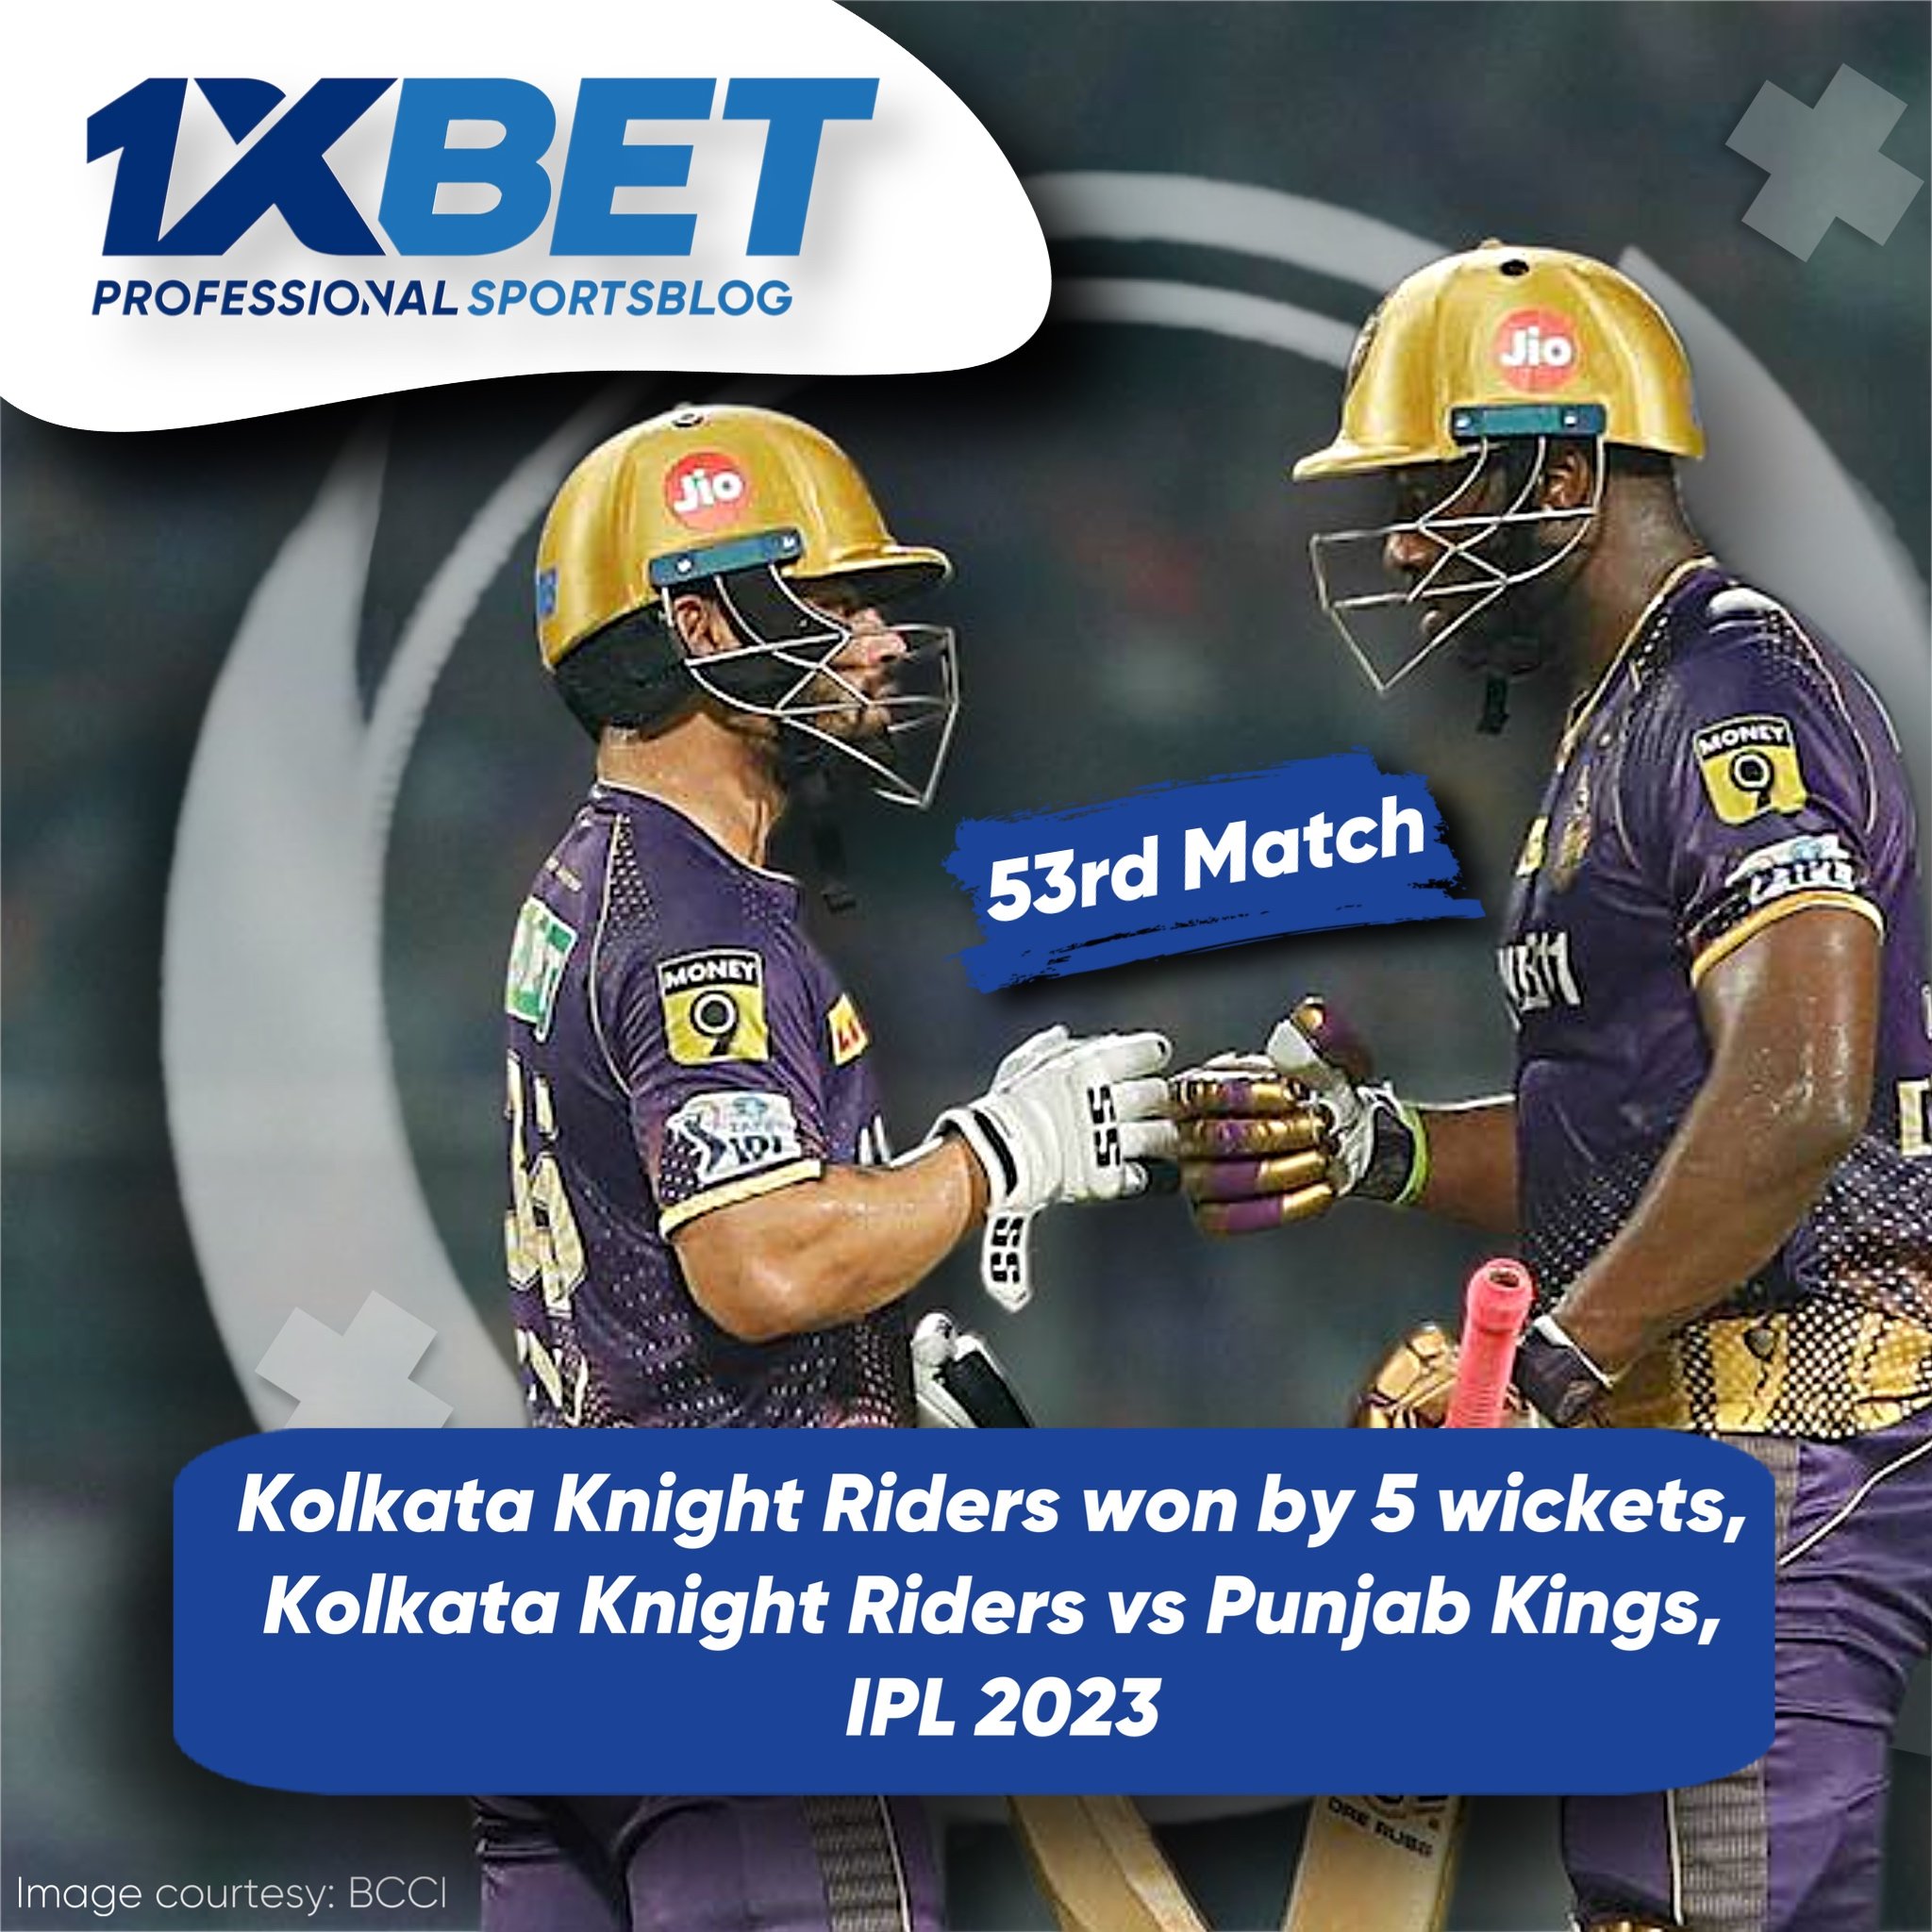 Kolkata Knight Riders won by 5 wickets